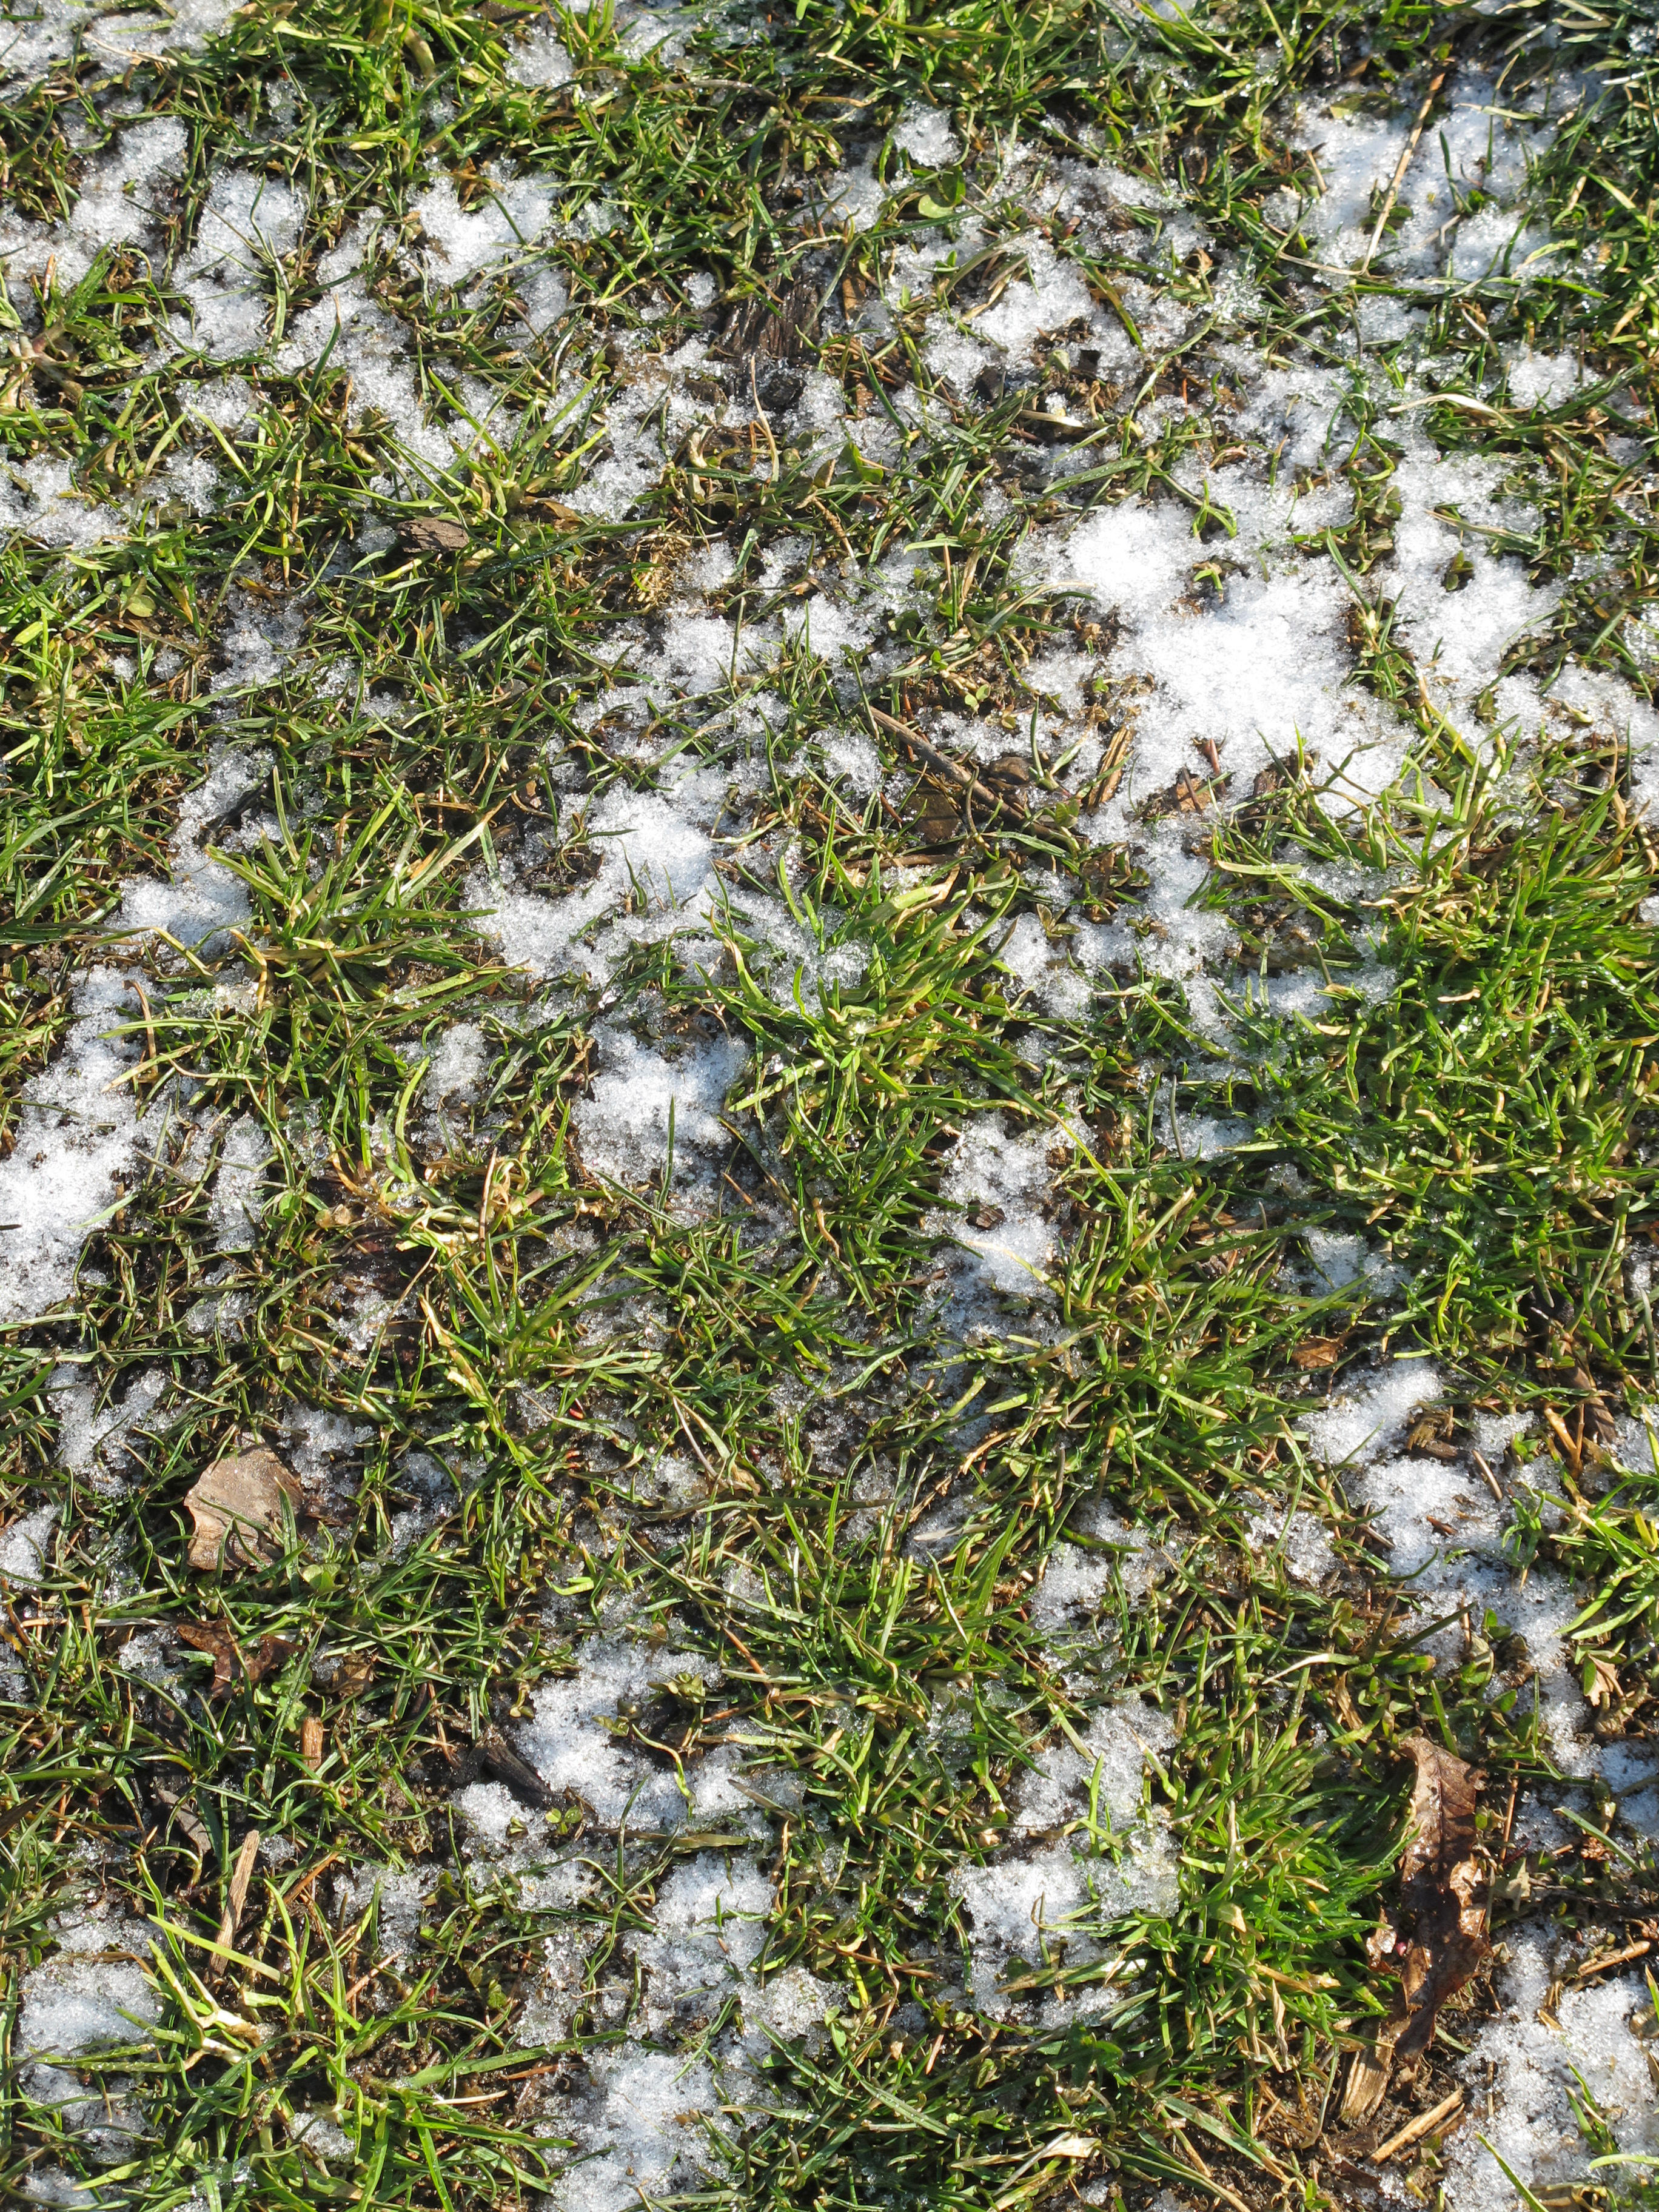 Melting Snow on Grass